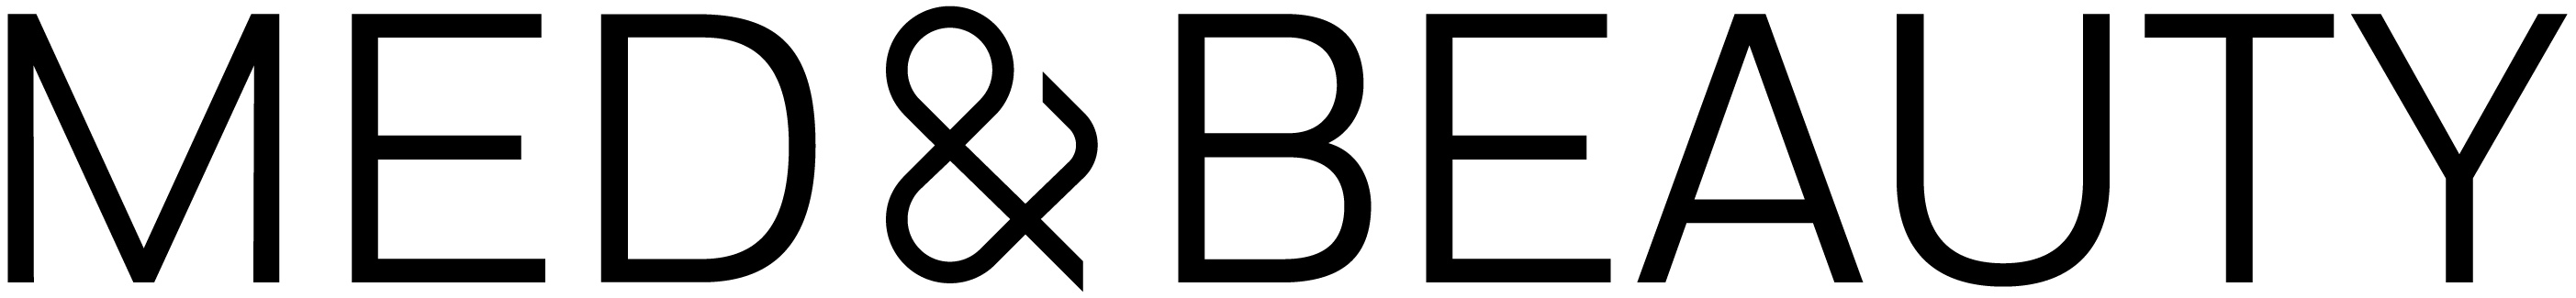 logo MED&BEAUTY - GROCHOLEWSKI SPÓLKA JAWNA